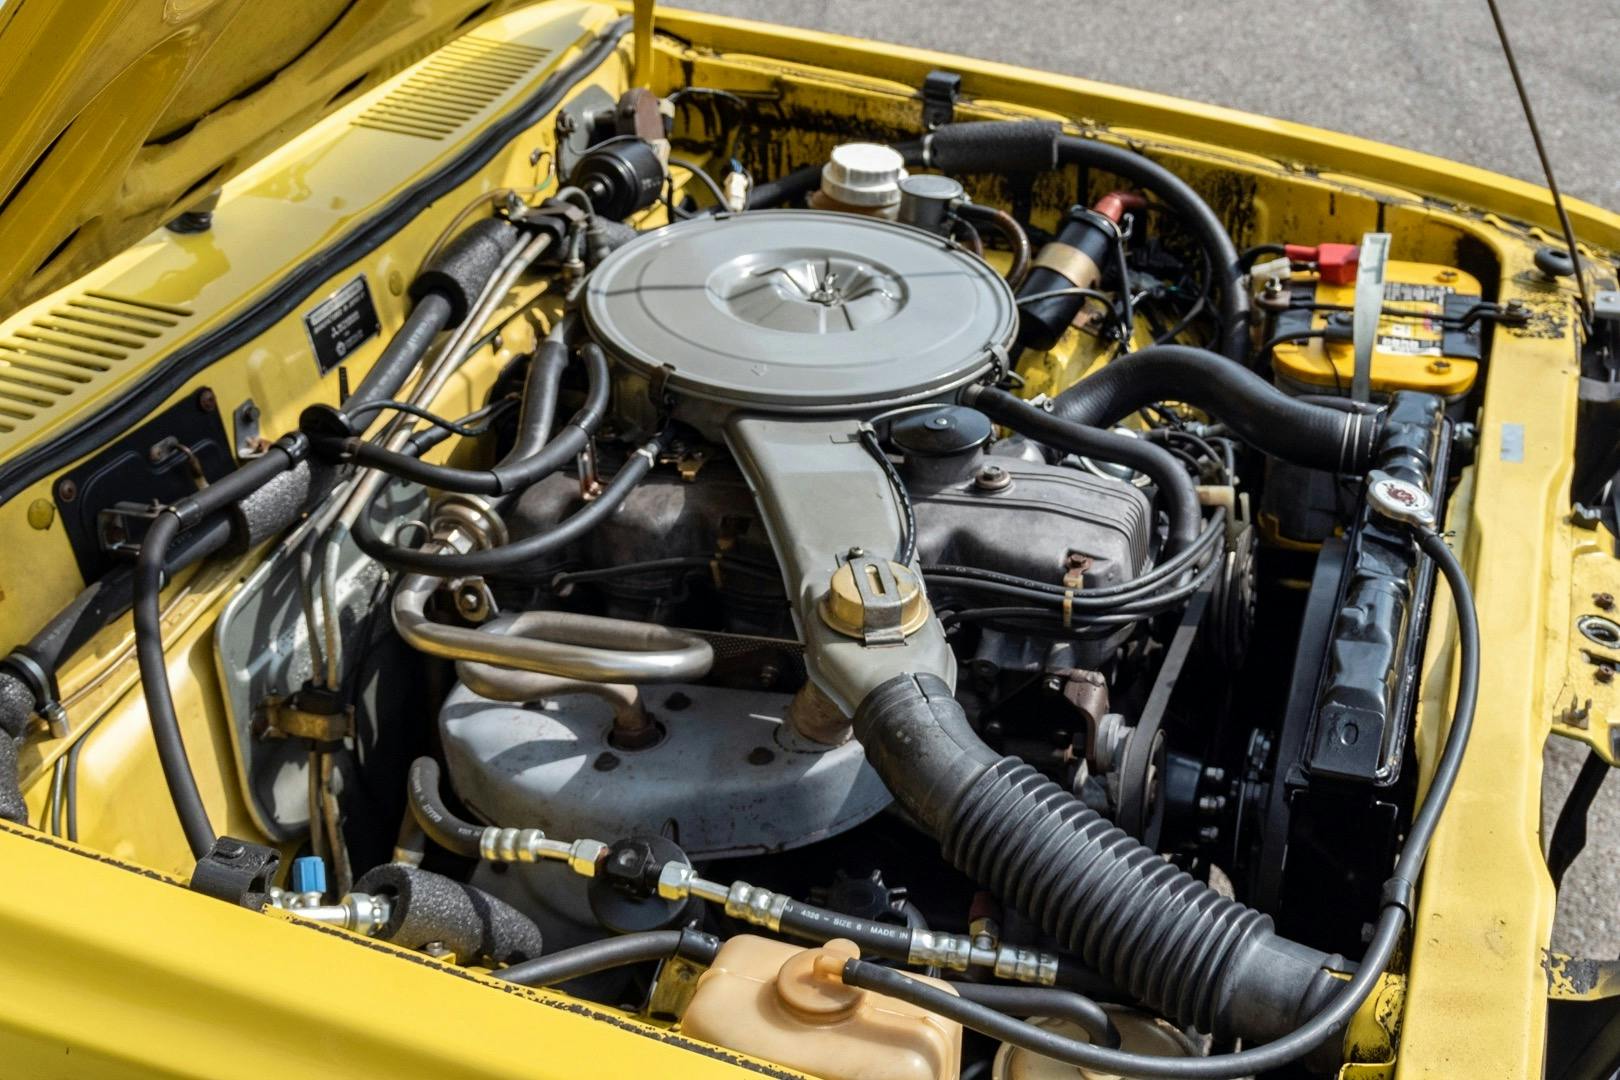 1980 Plymouth Arrow 2-6 liter engine